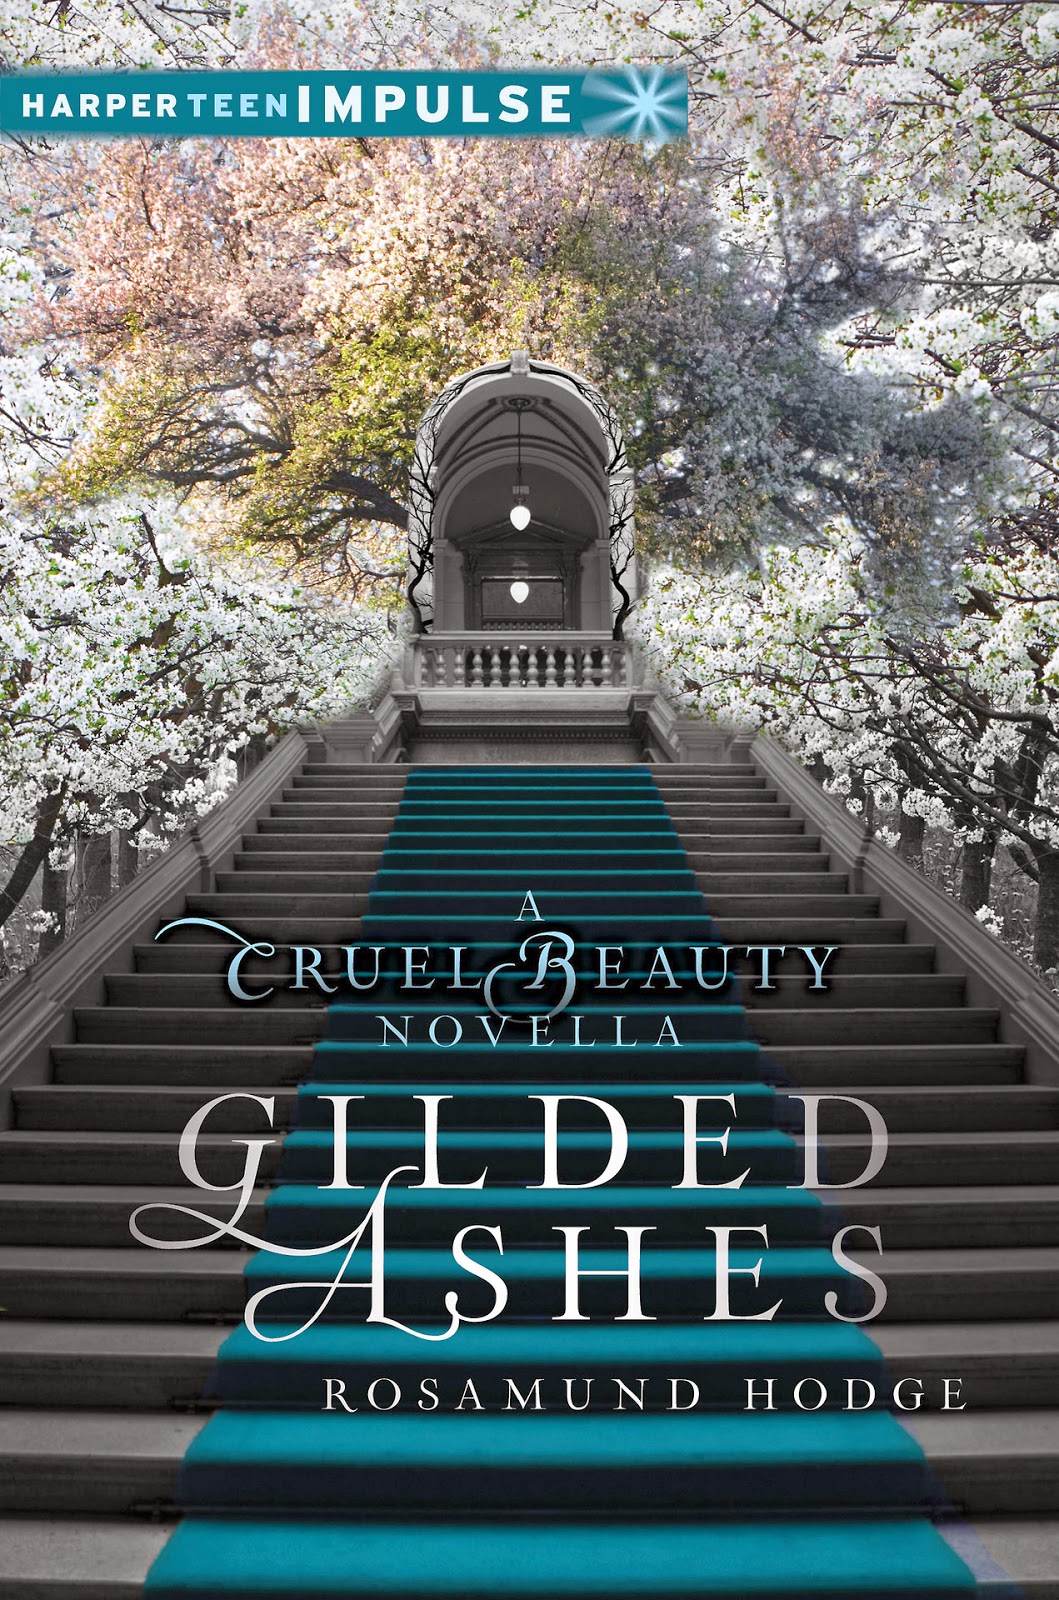 Cruel Beauty - Rosamund Hodge Gilded+ashes